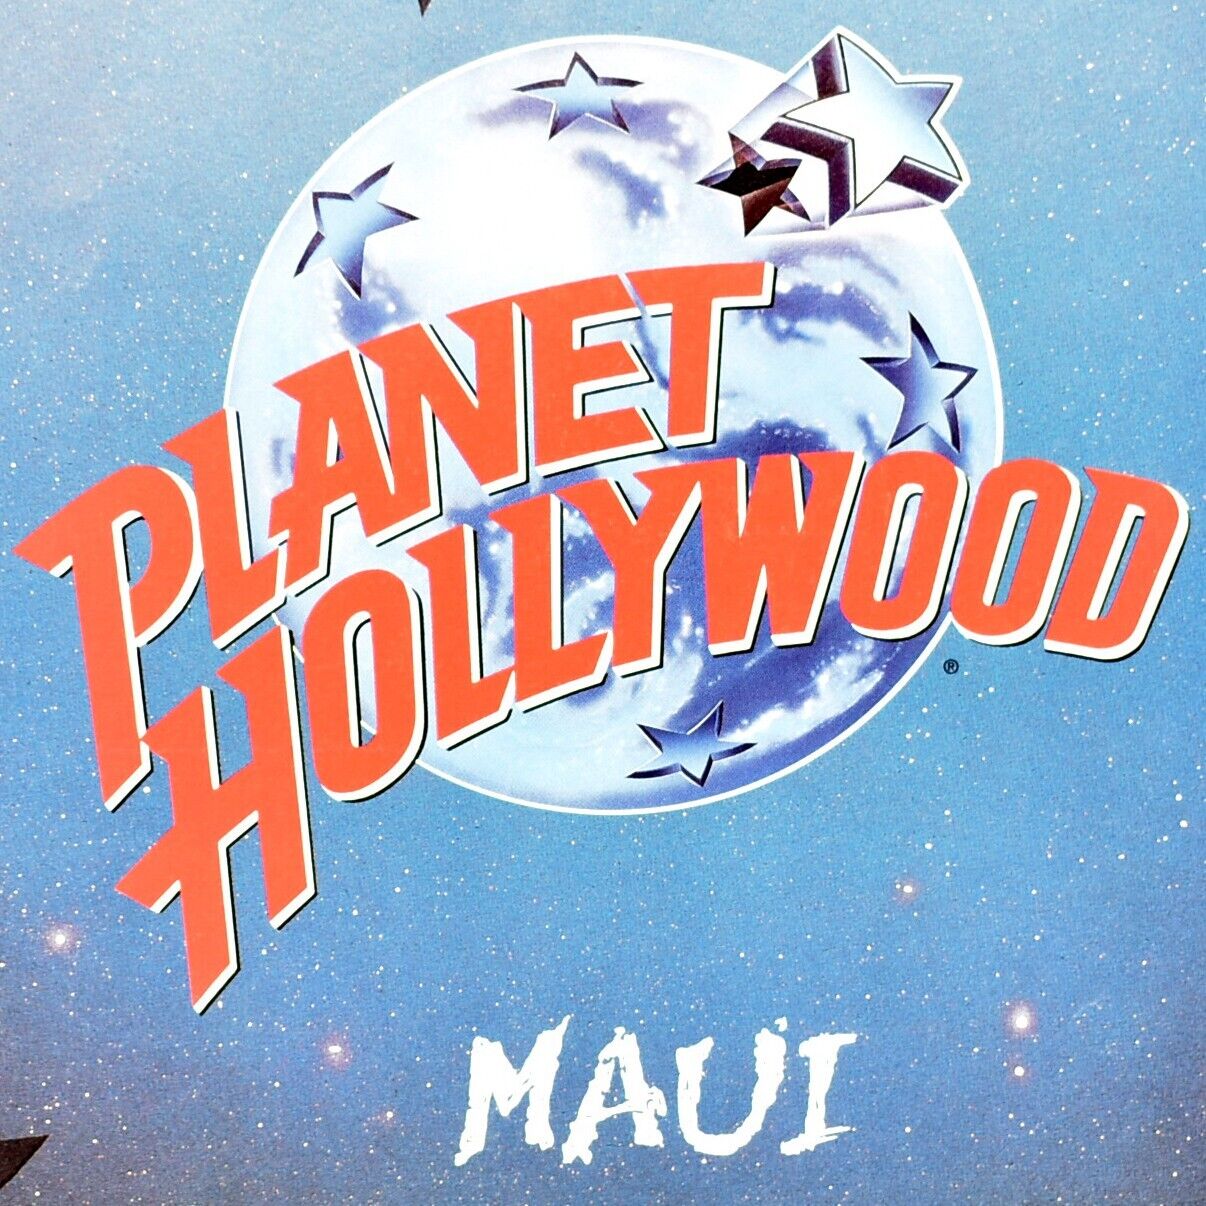 1995 Planet Hollywood Restaurant Menu 744 Front Street Lahaina Maui Hawaii